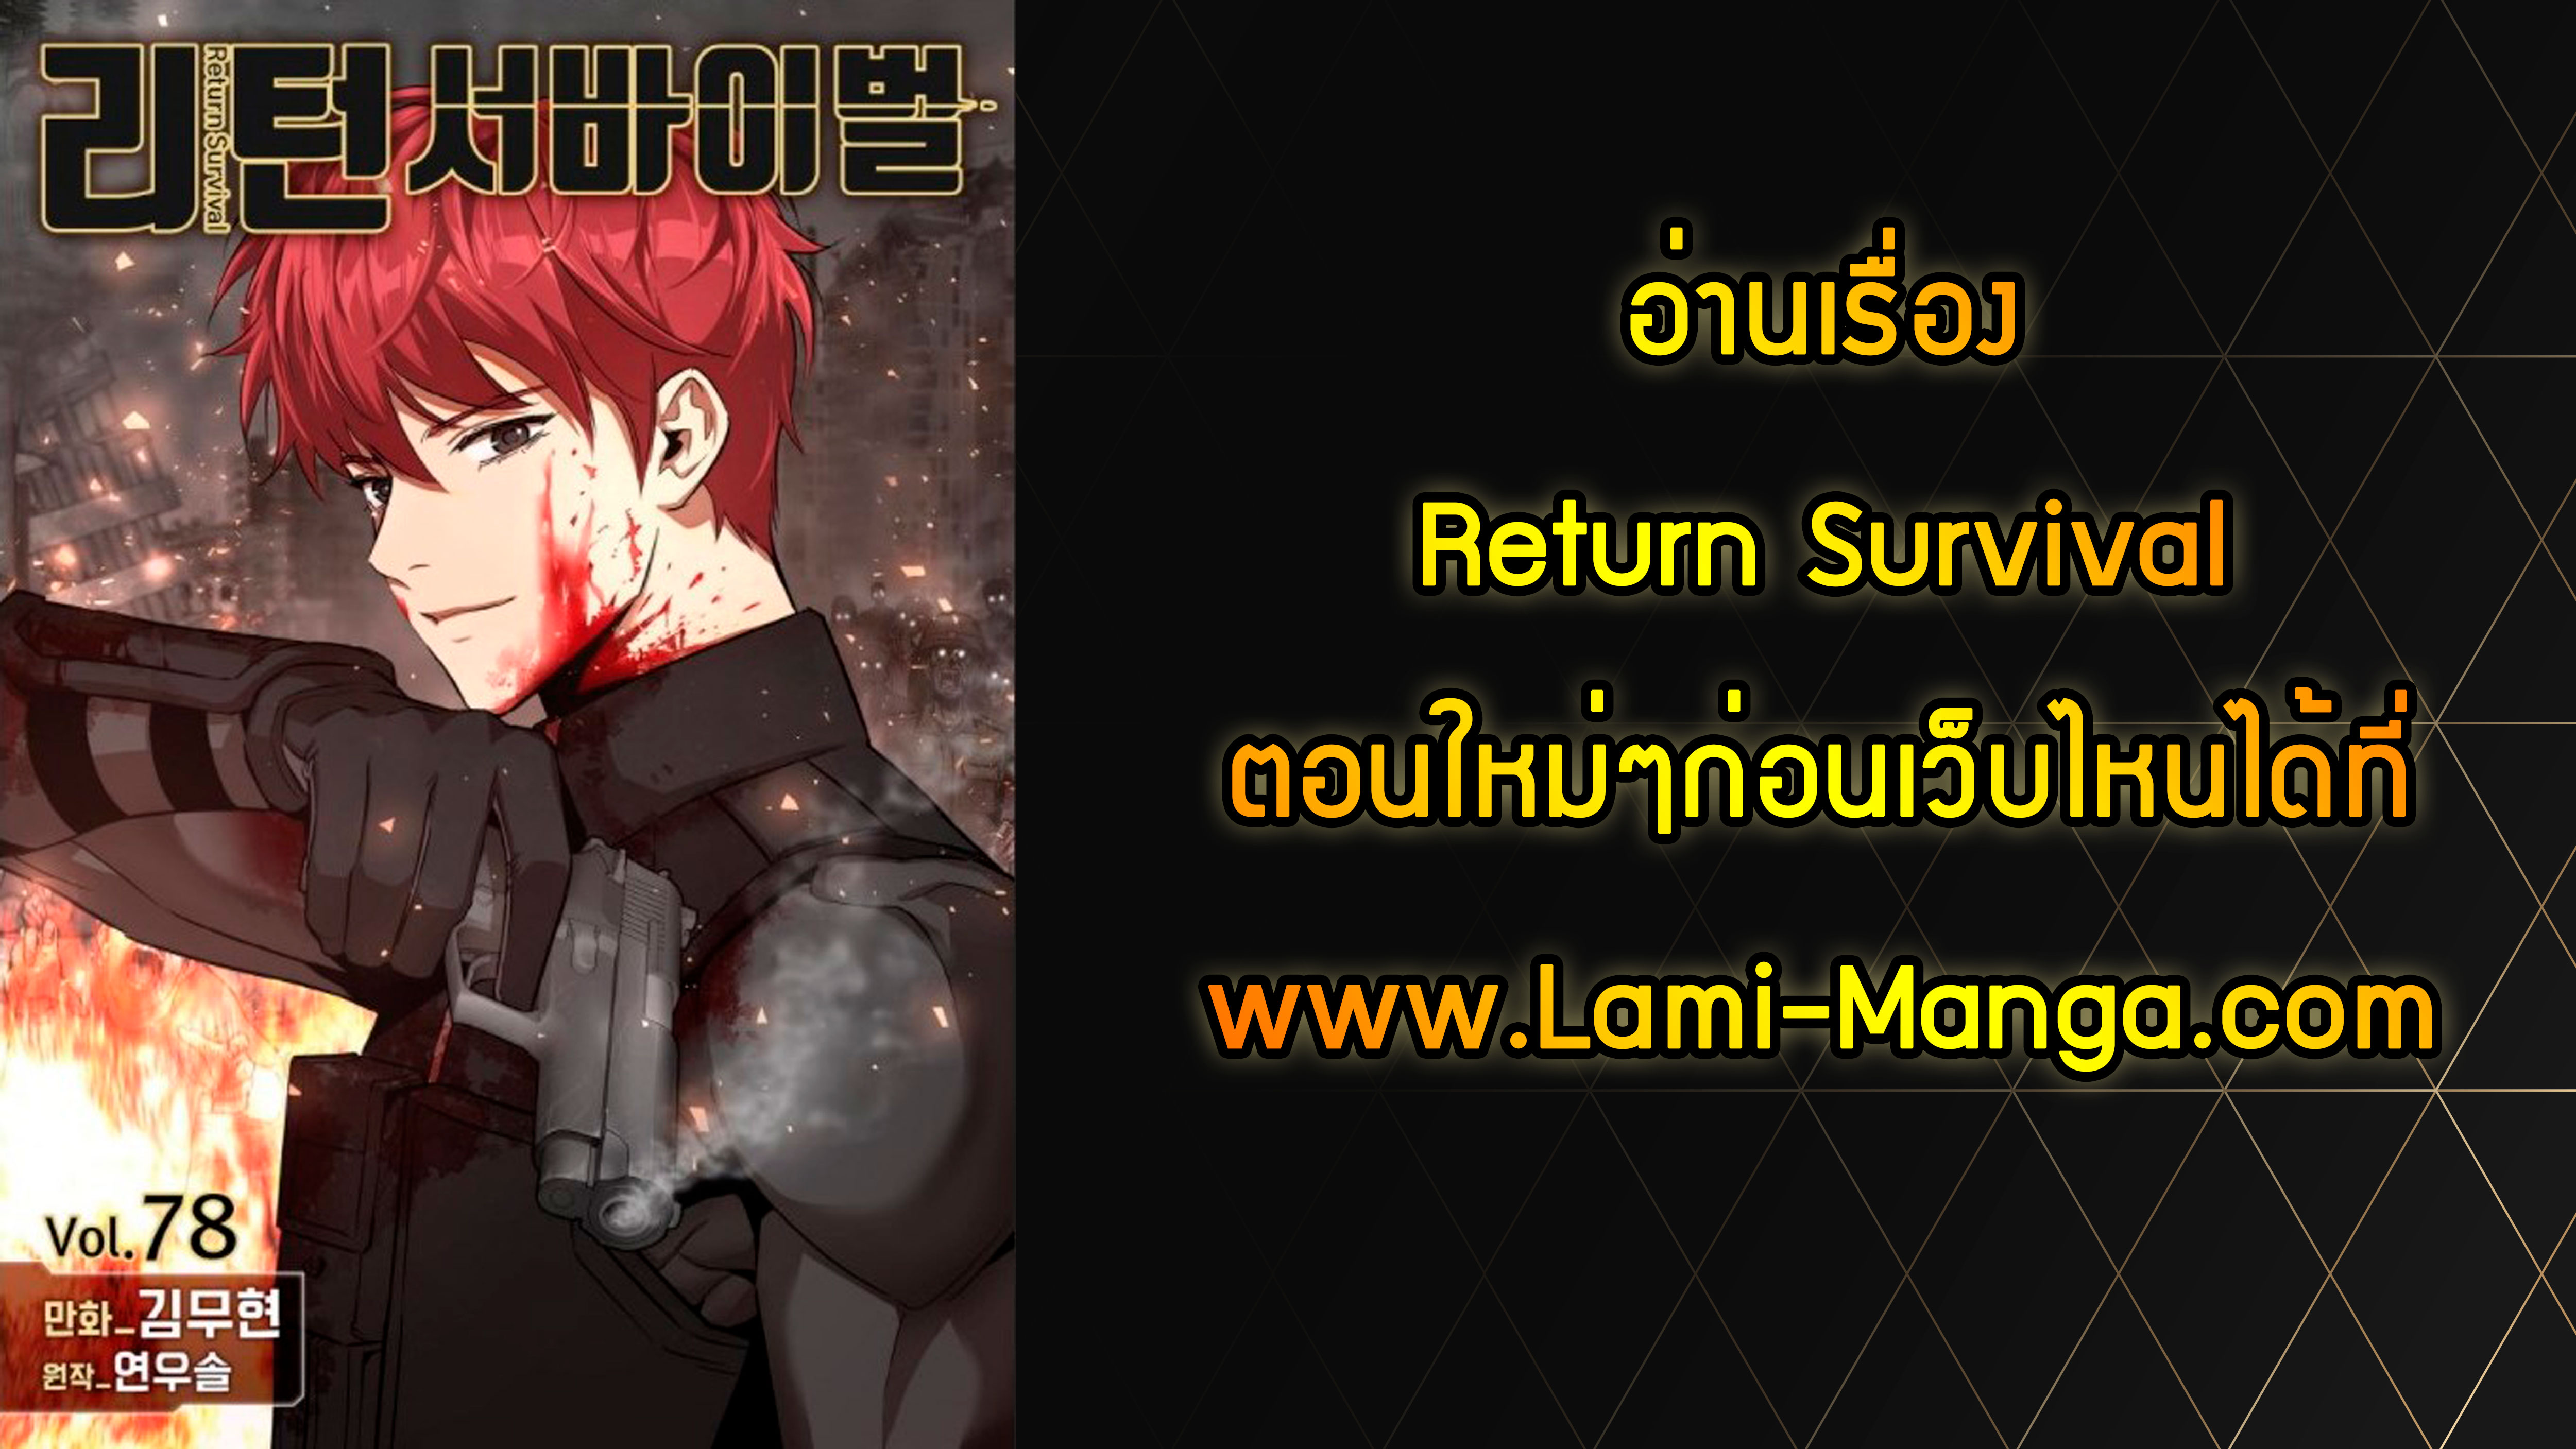 Return Survival 31 30